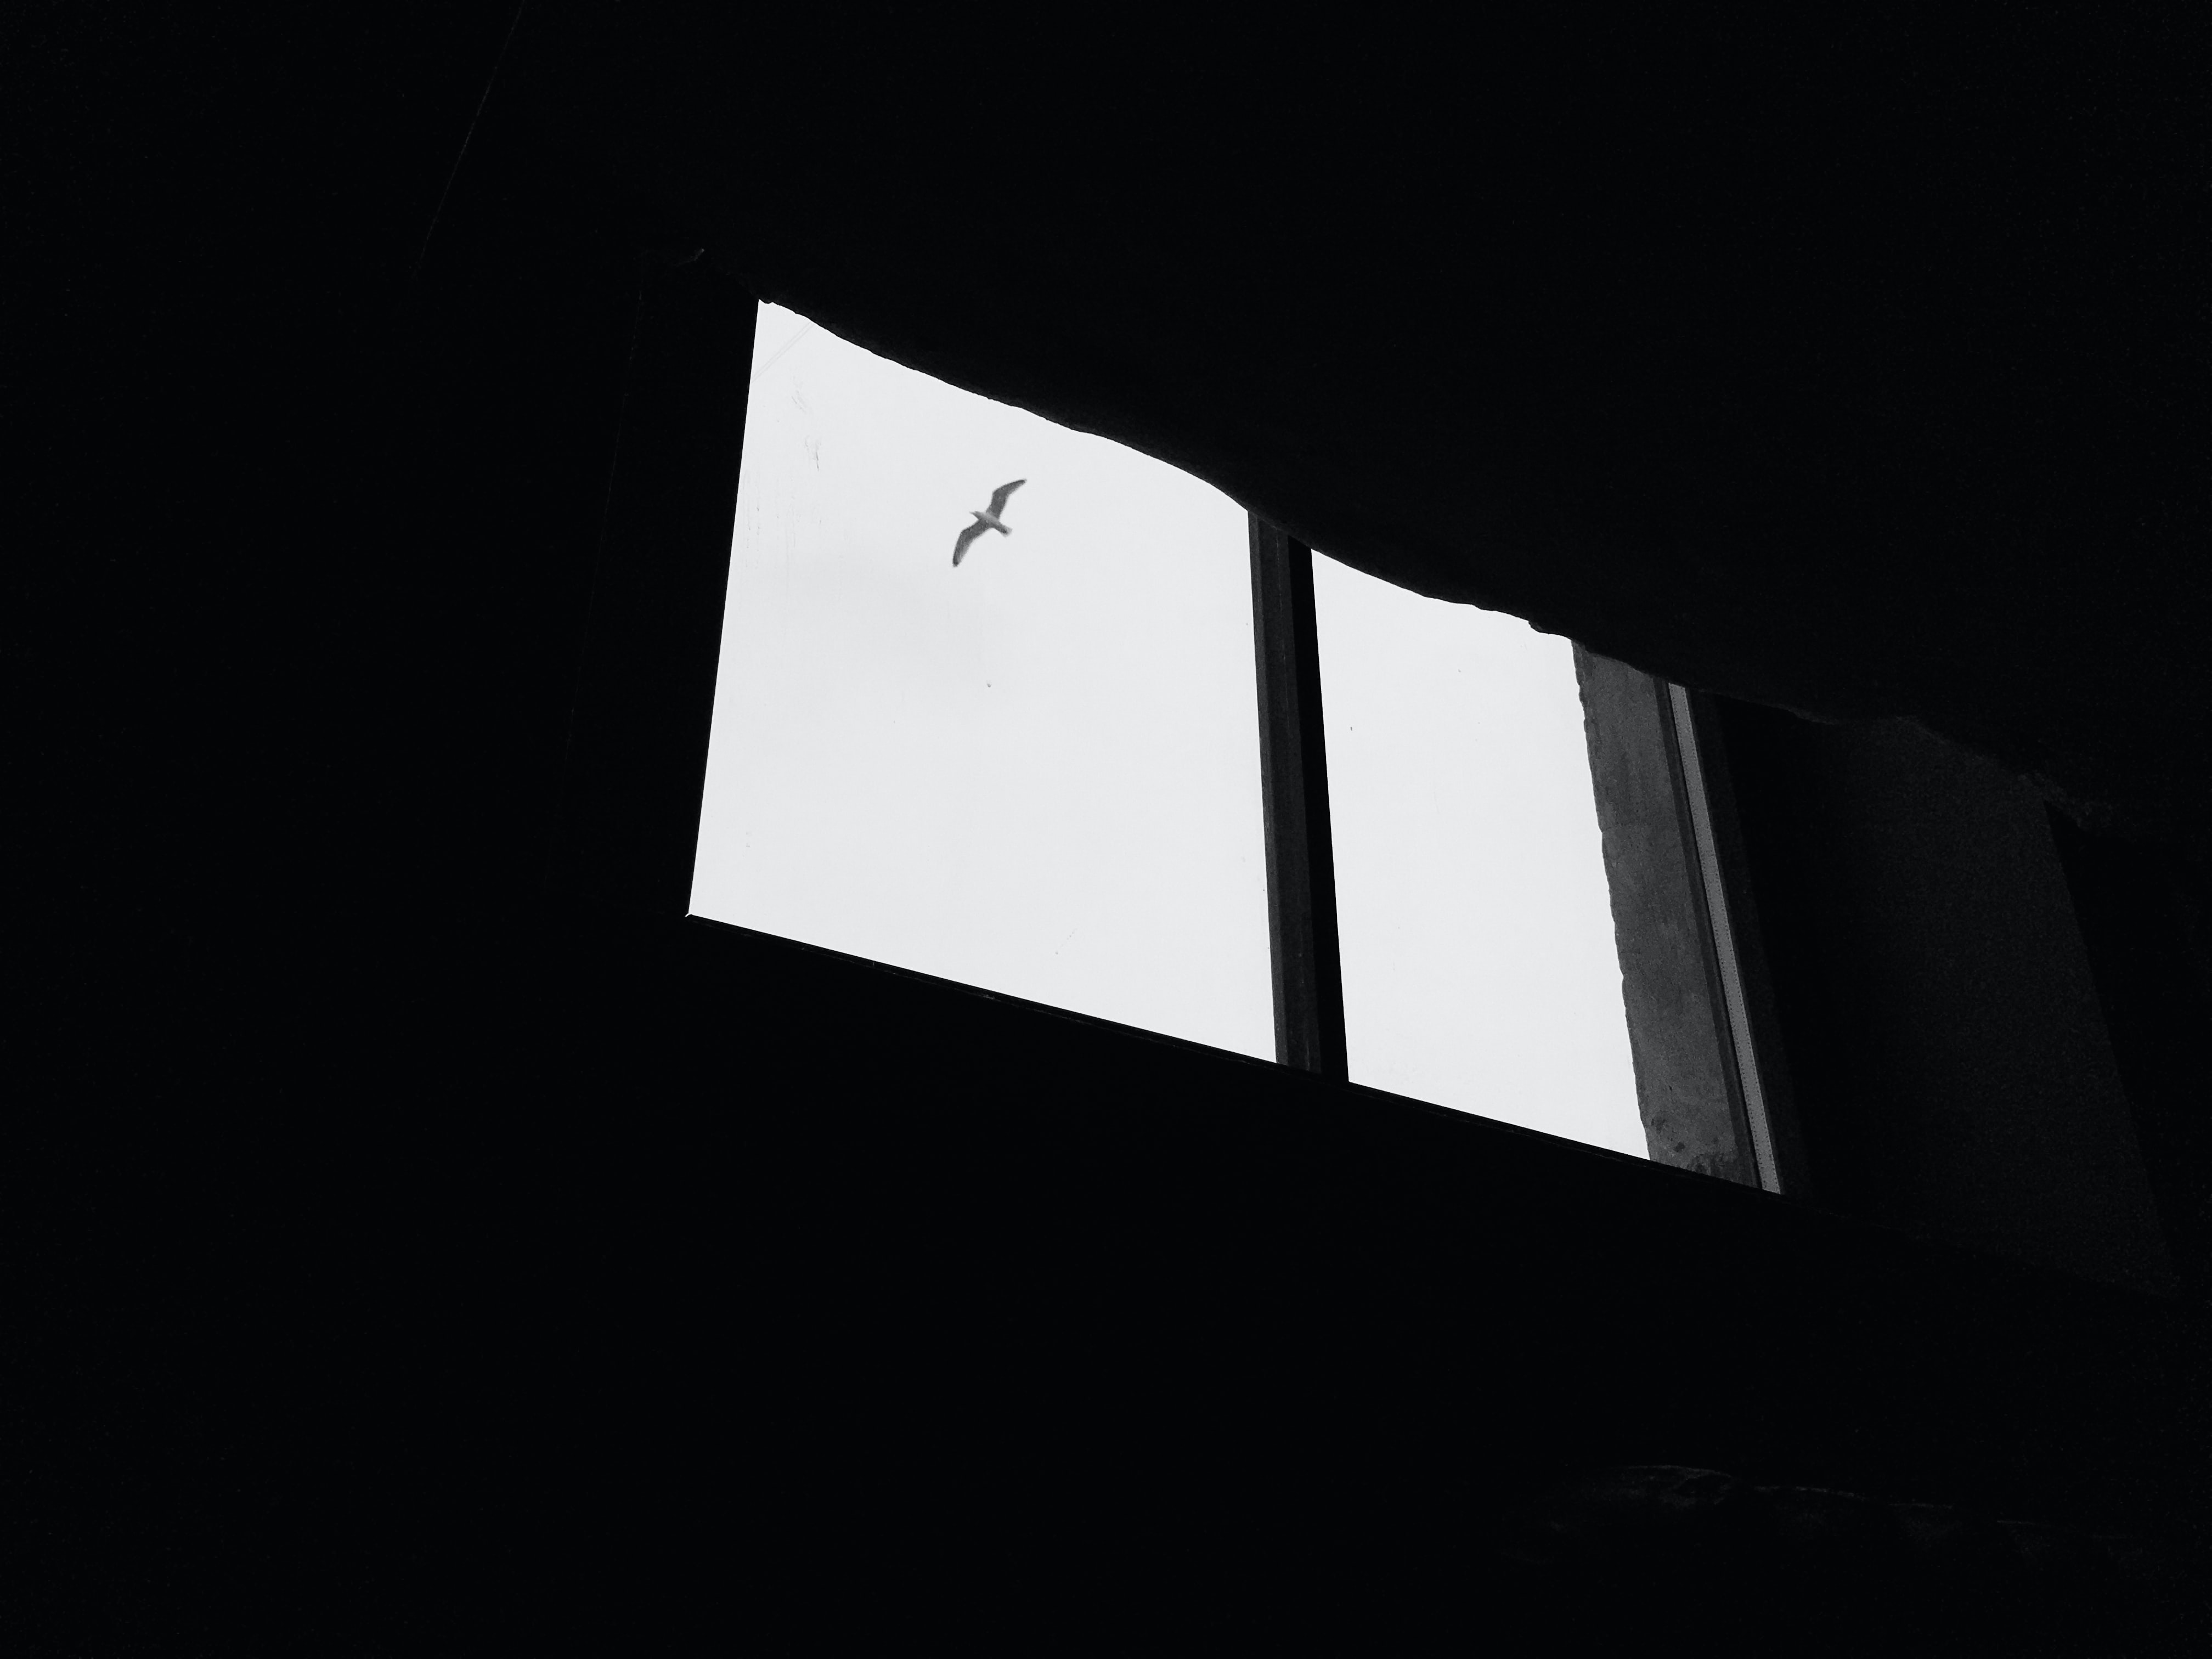 seagull, sky, miscellanea, miscellaneous, bird, window, gull High Definition image